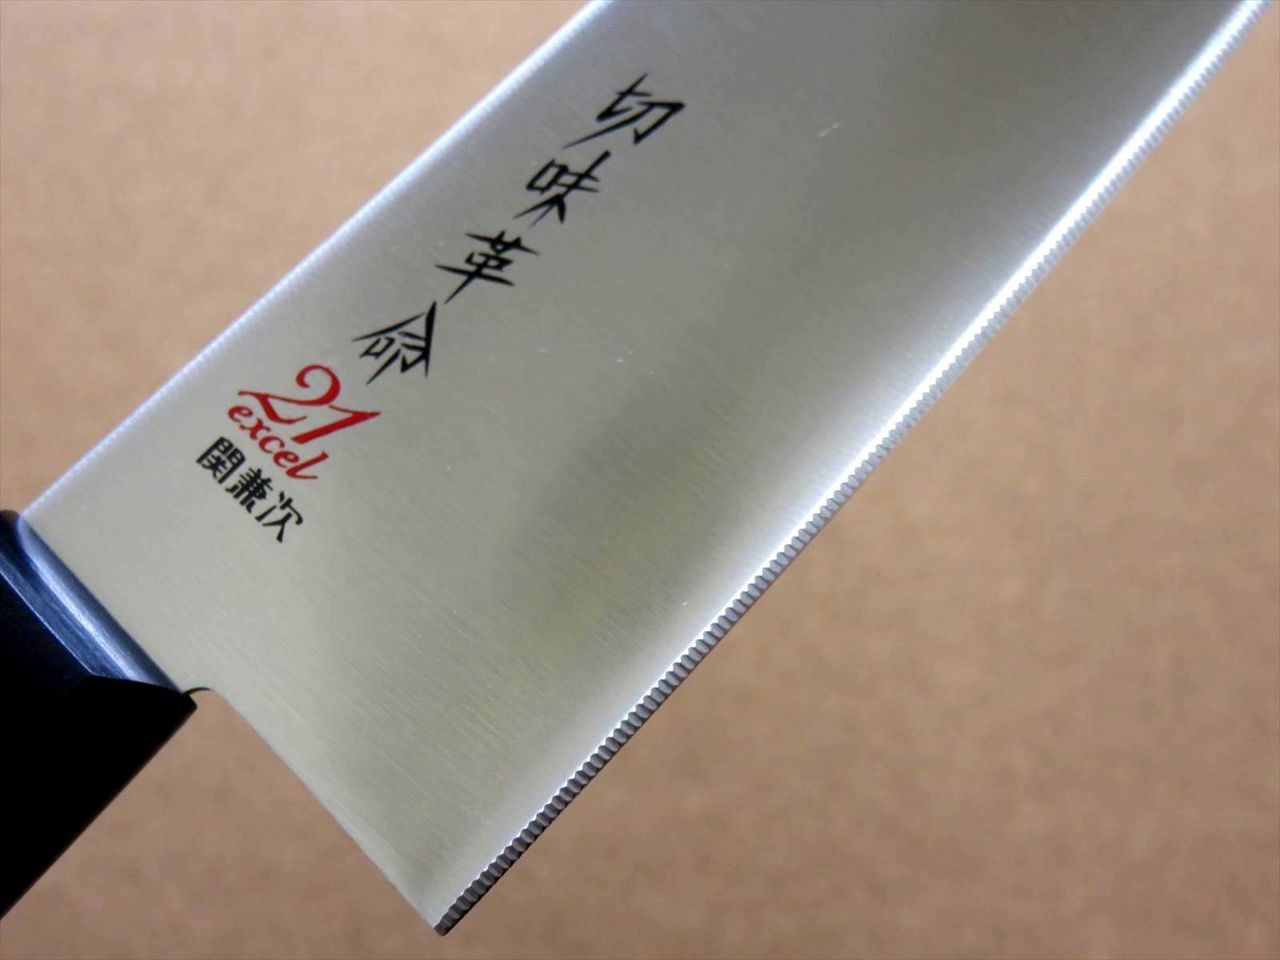 Japanese Kitchen Santoku Knife 6.5 inch Household use Serrated blade SEKI JAPAN